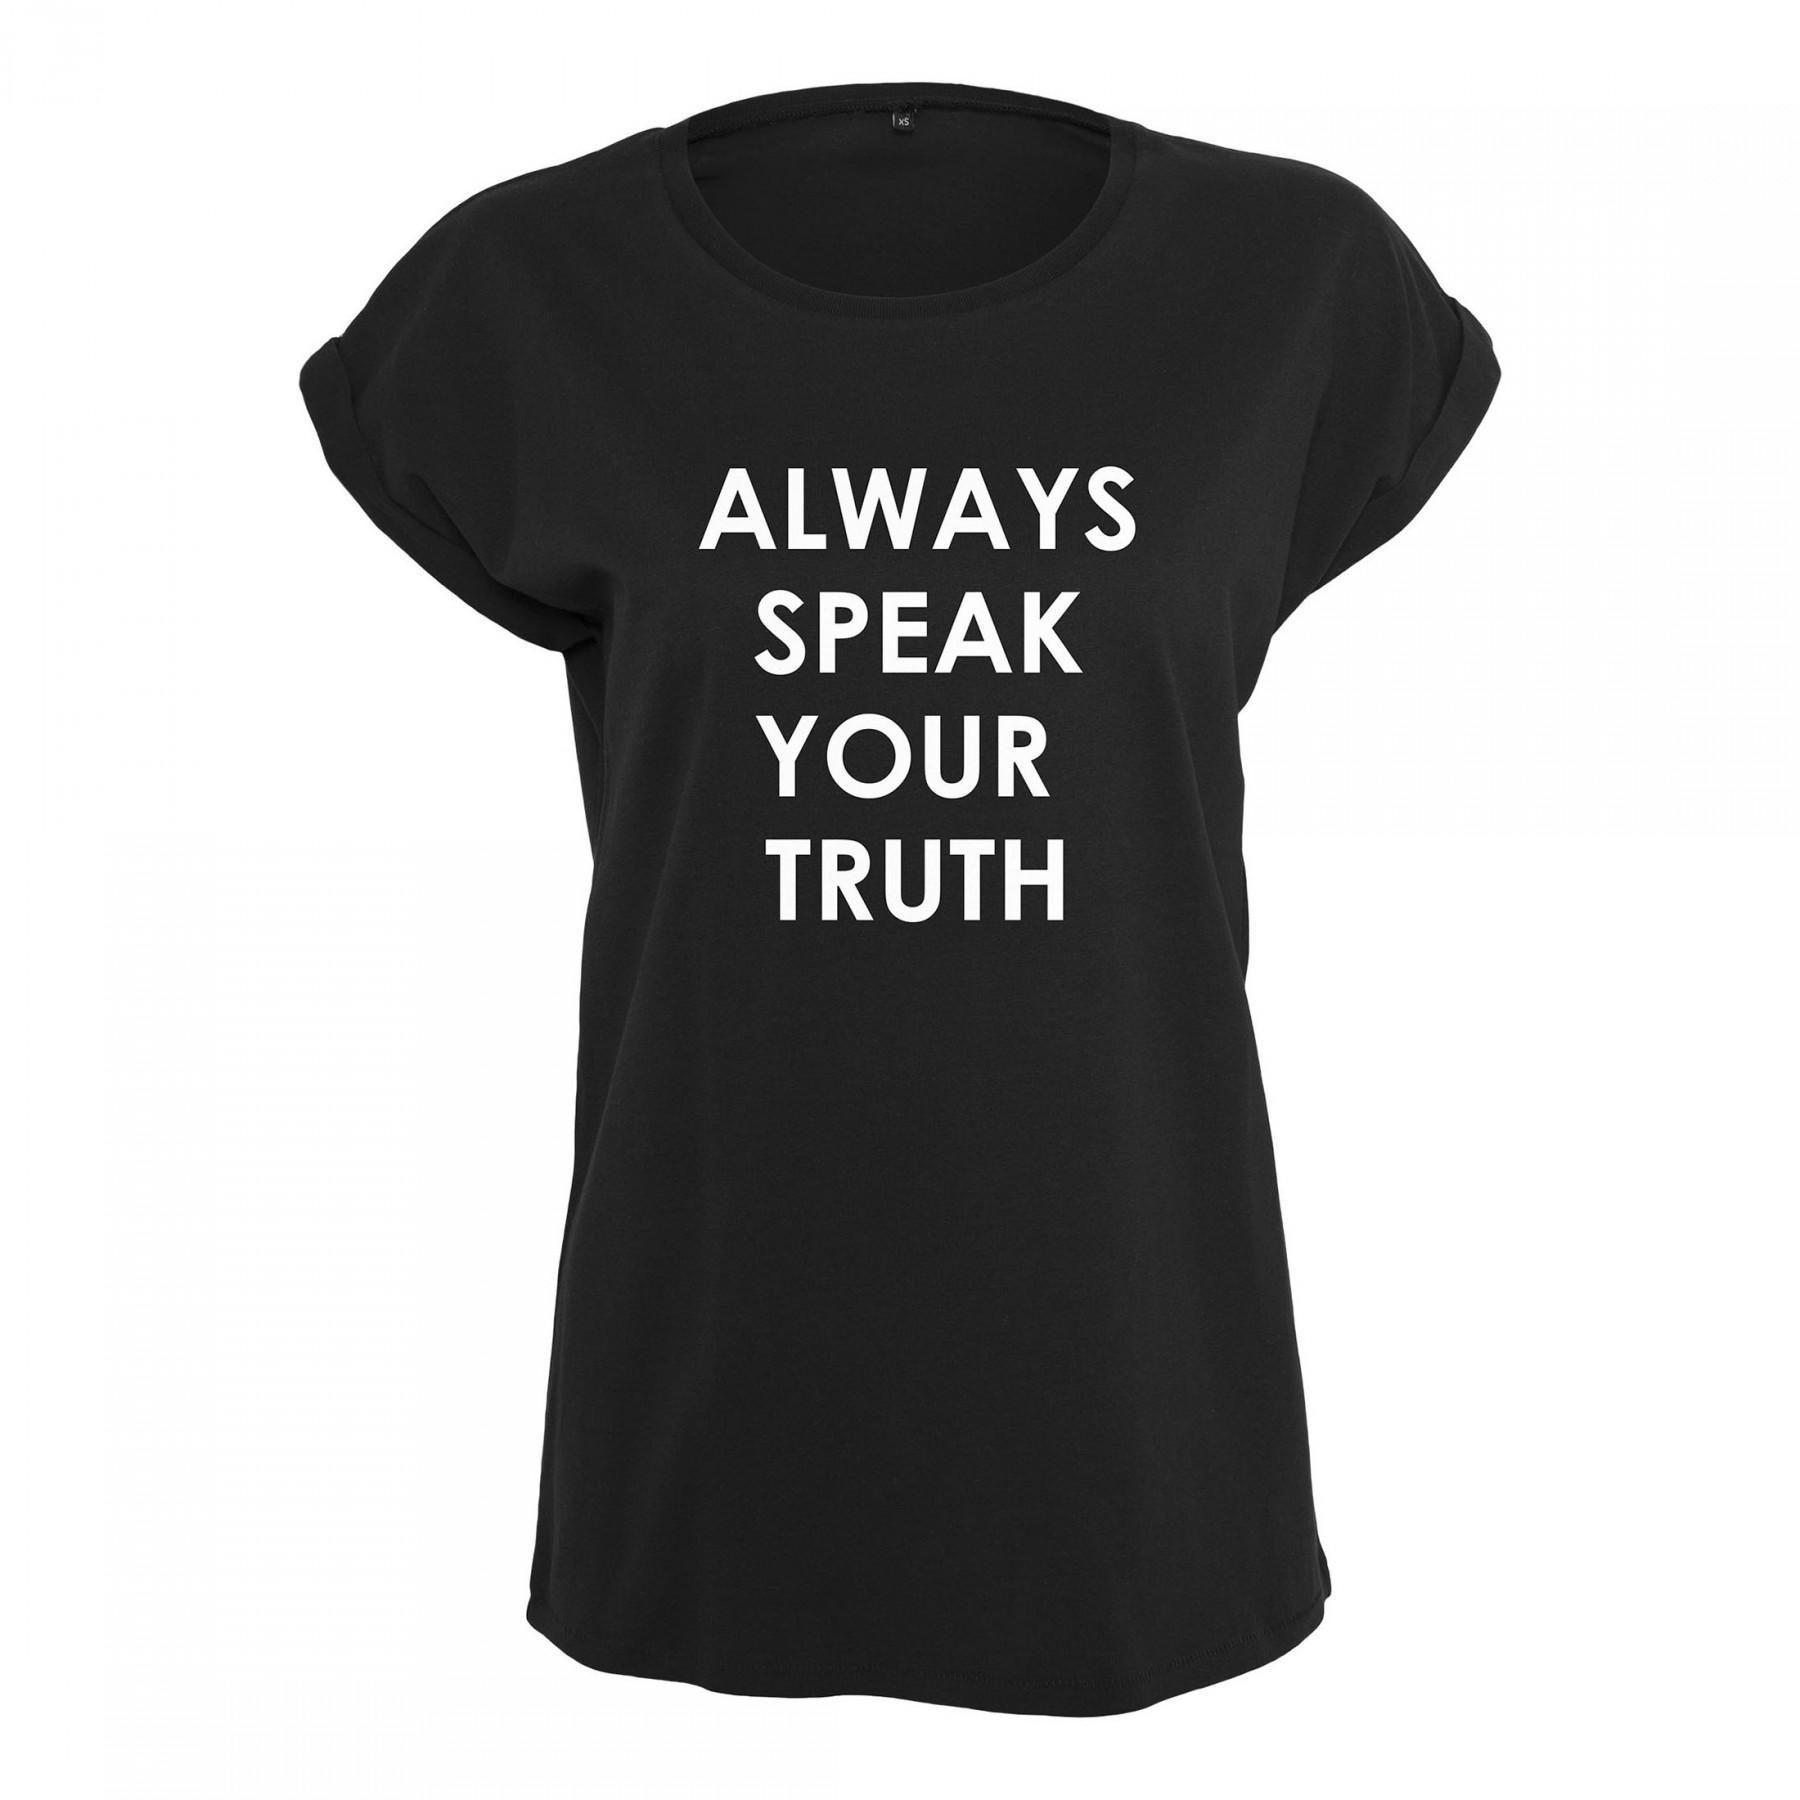 Women's T-shirt Mister Tee peak truth